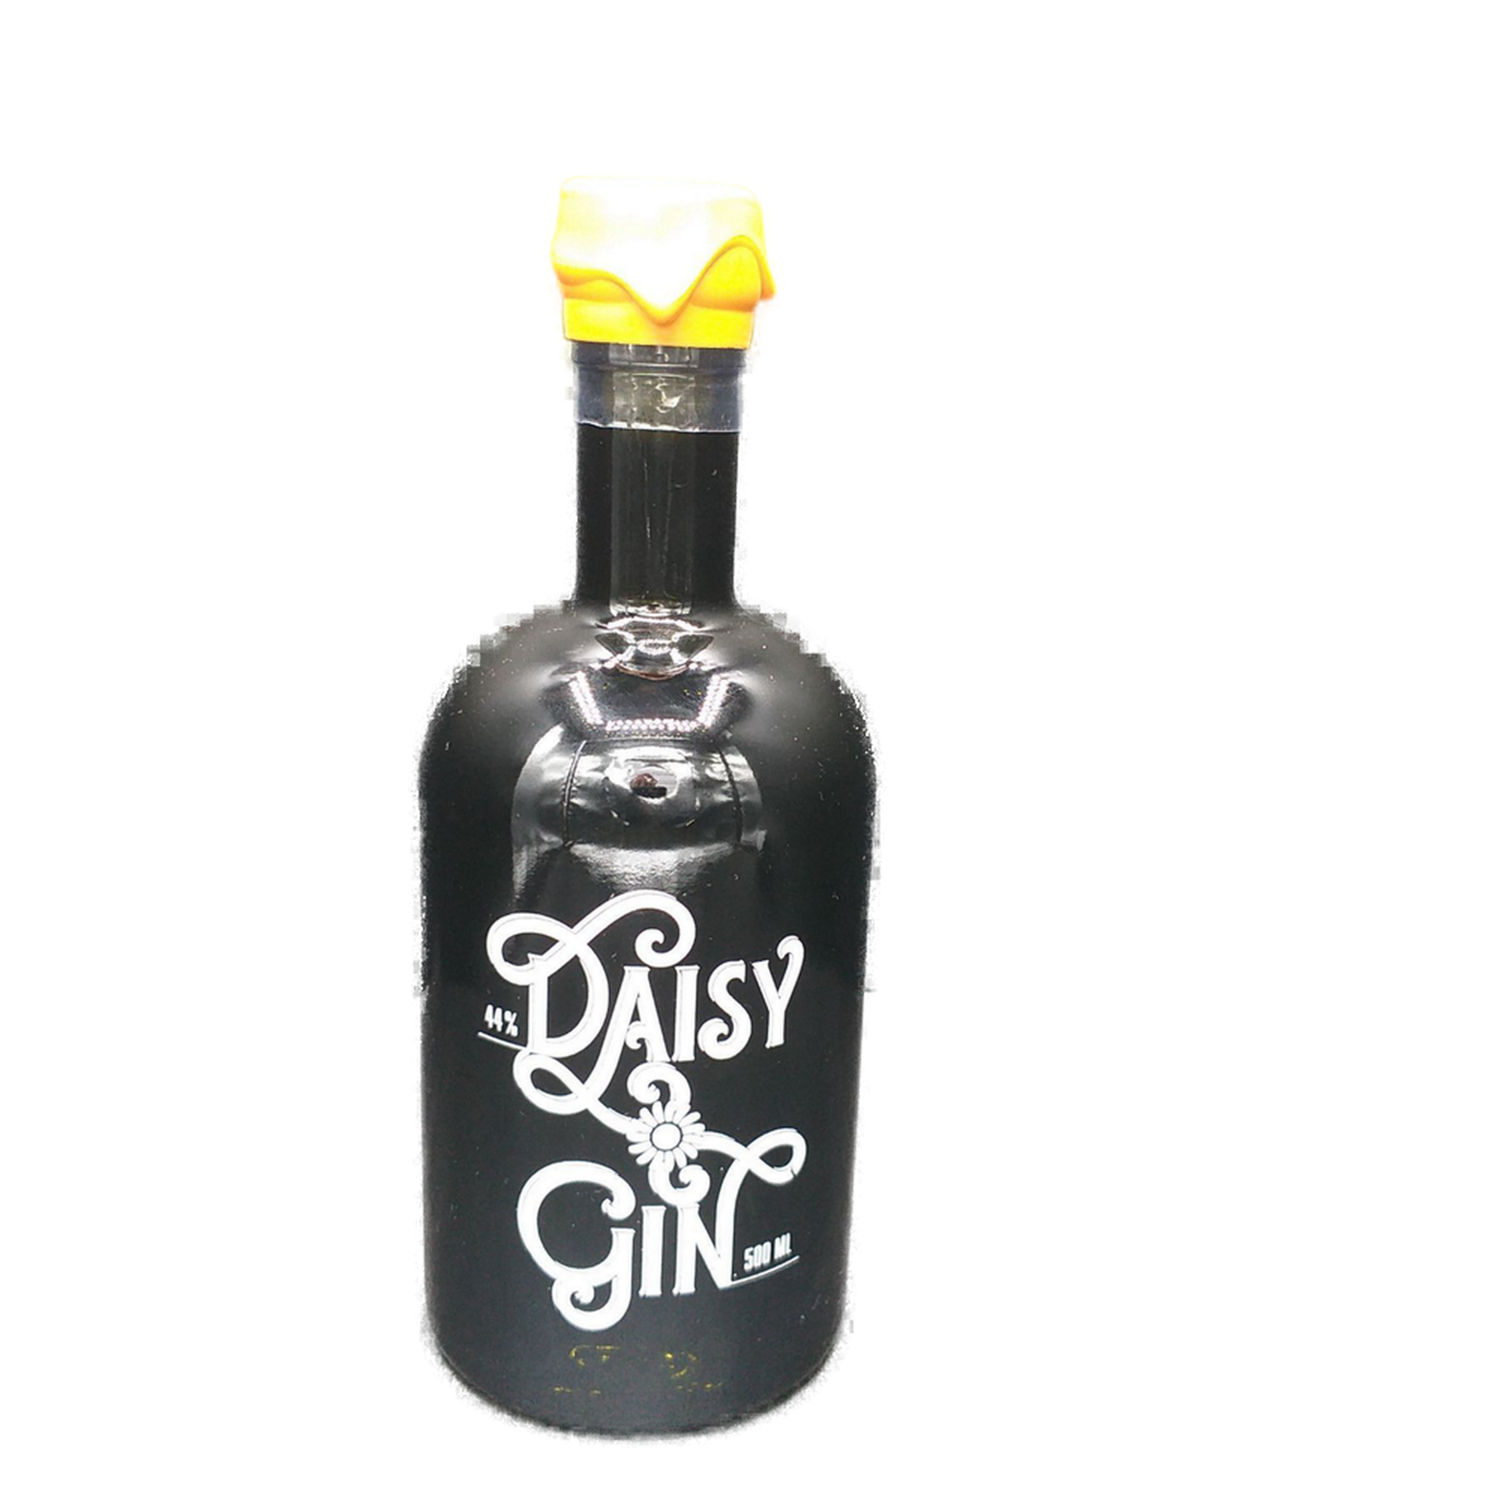 Daisy London Dry Gin Deutschland 44% VOL. | Gin